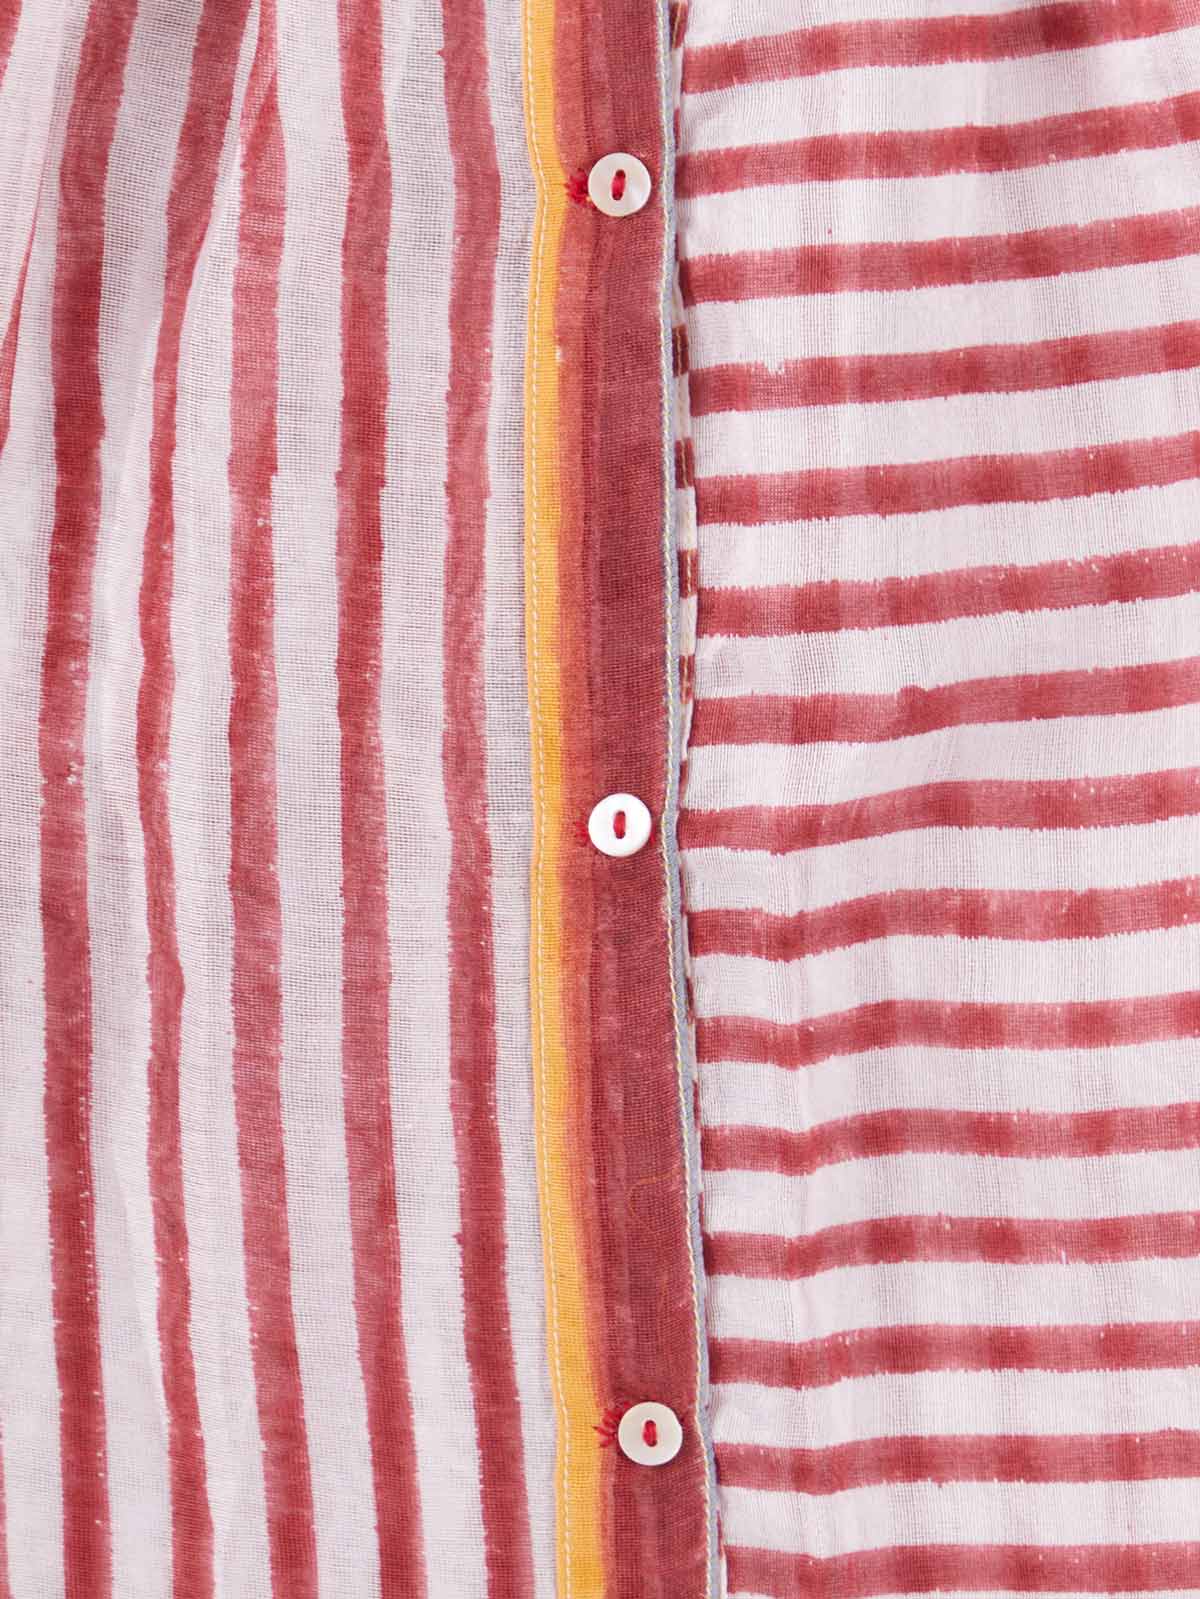 injiri red striped shirt for baby close up